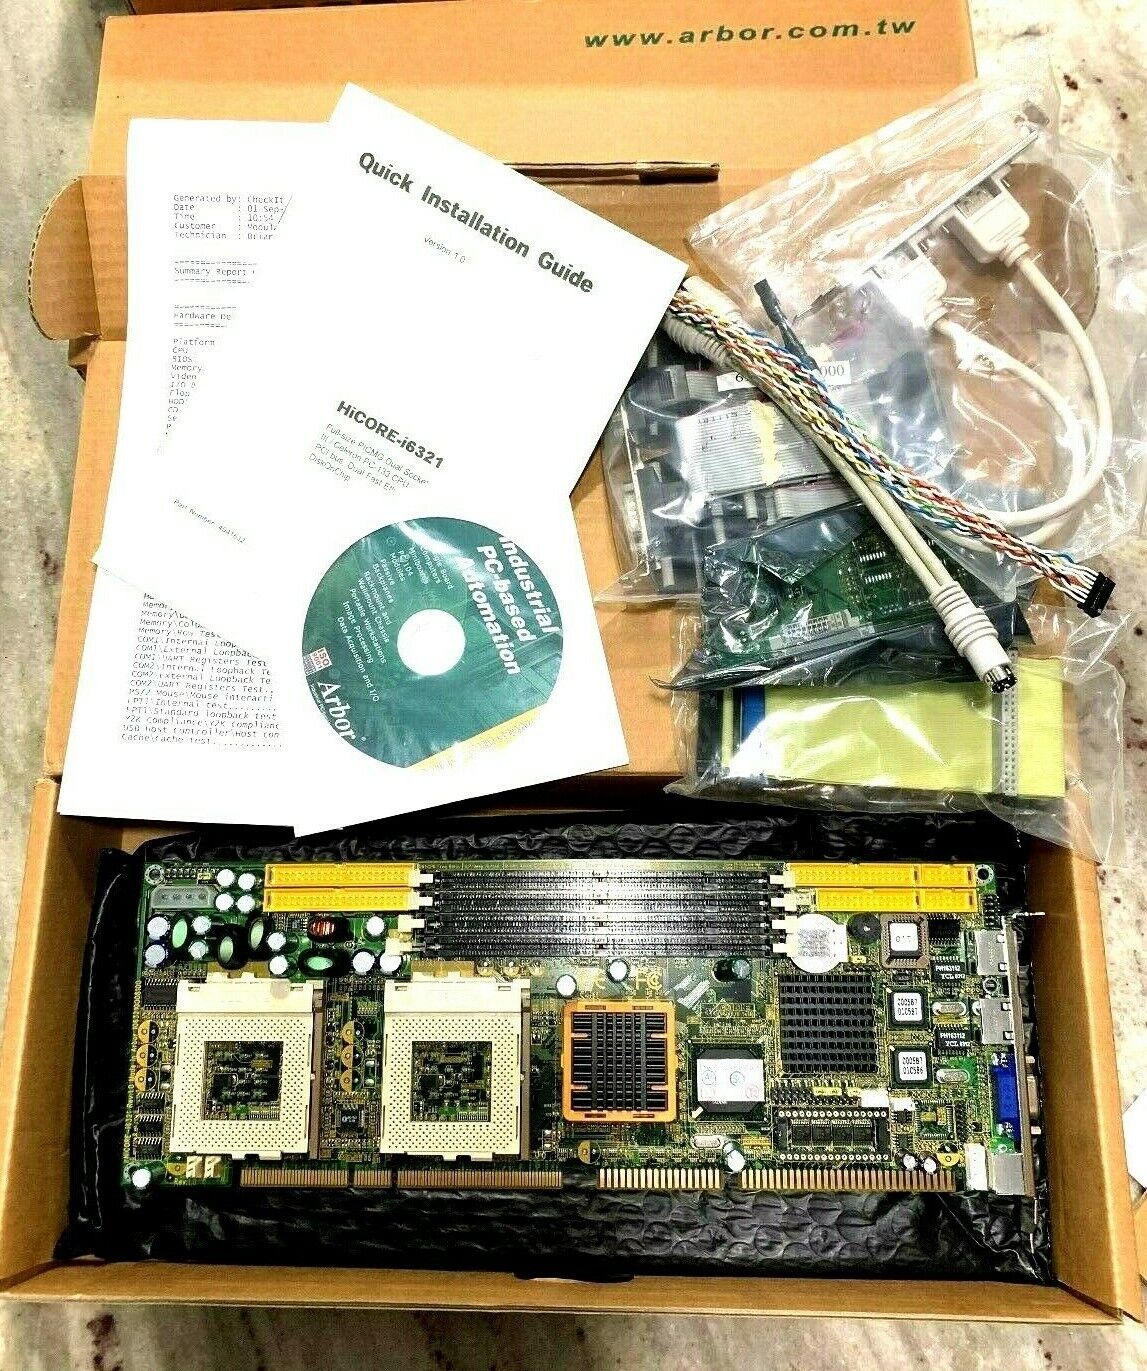 ARBOR HiCORE-i6321VL2 Full-size, S370 DUAL P3 CPU CARD W/2x FAST LAN, CRT & DOC